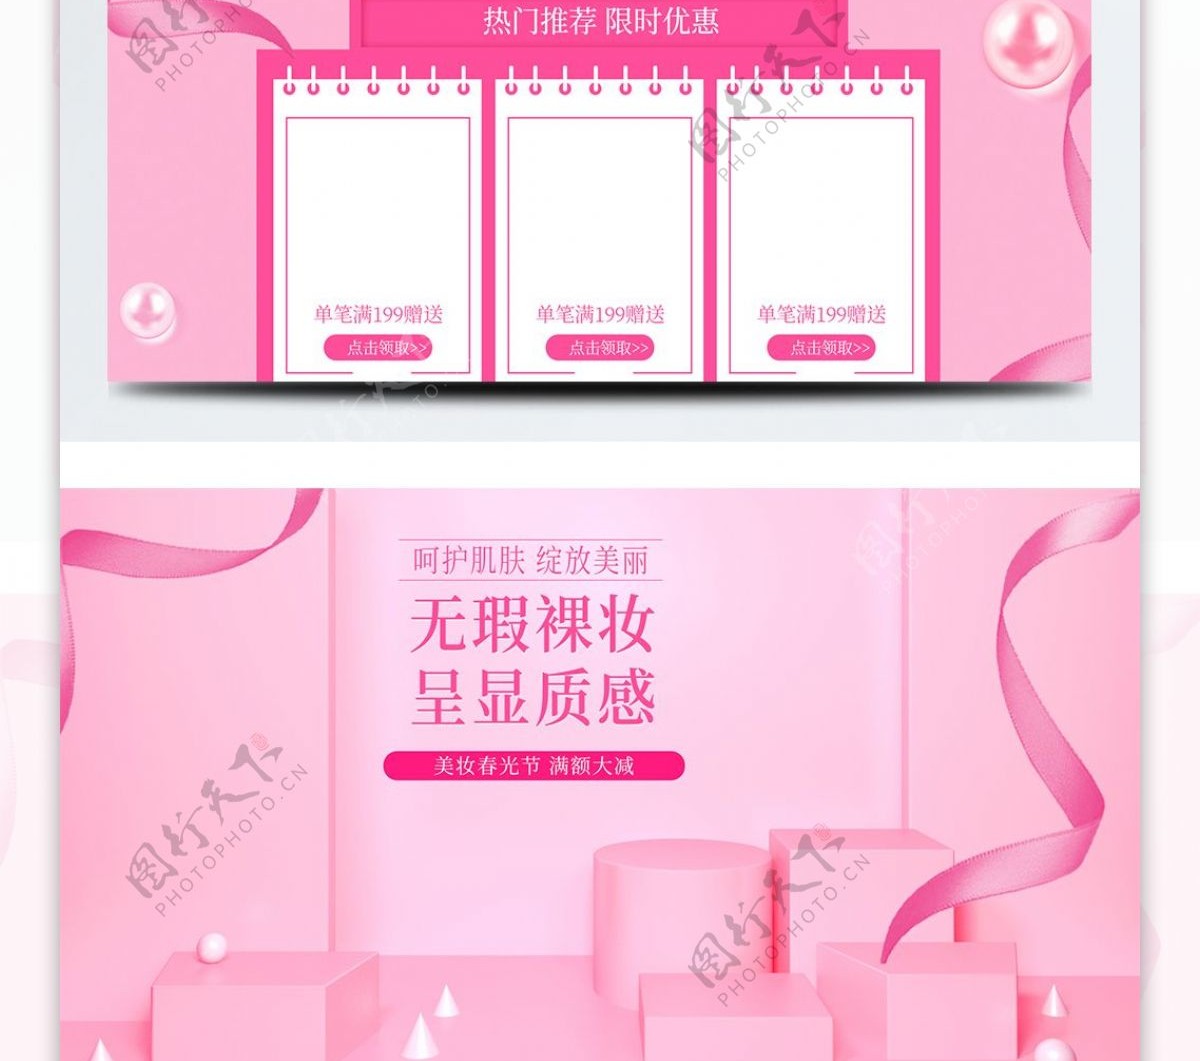 C4D粉色立体春光节美妆洗护化妆品首页